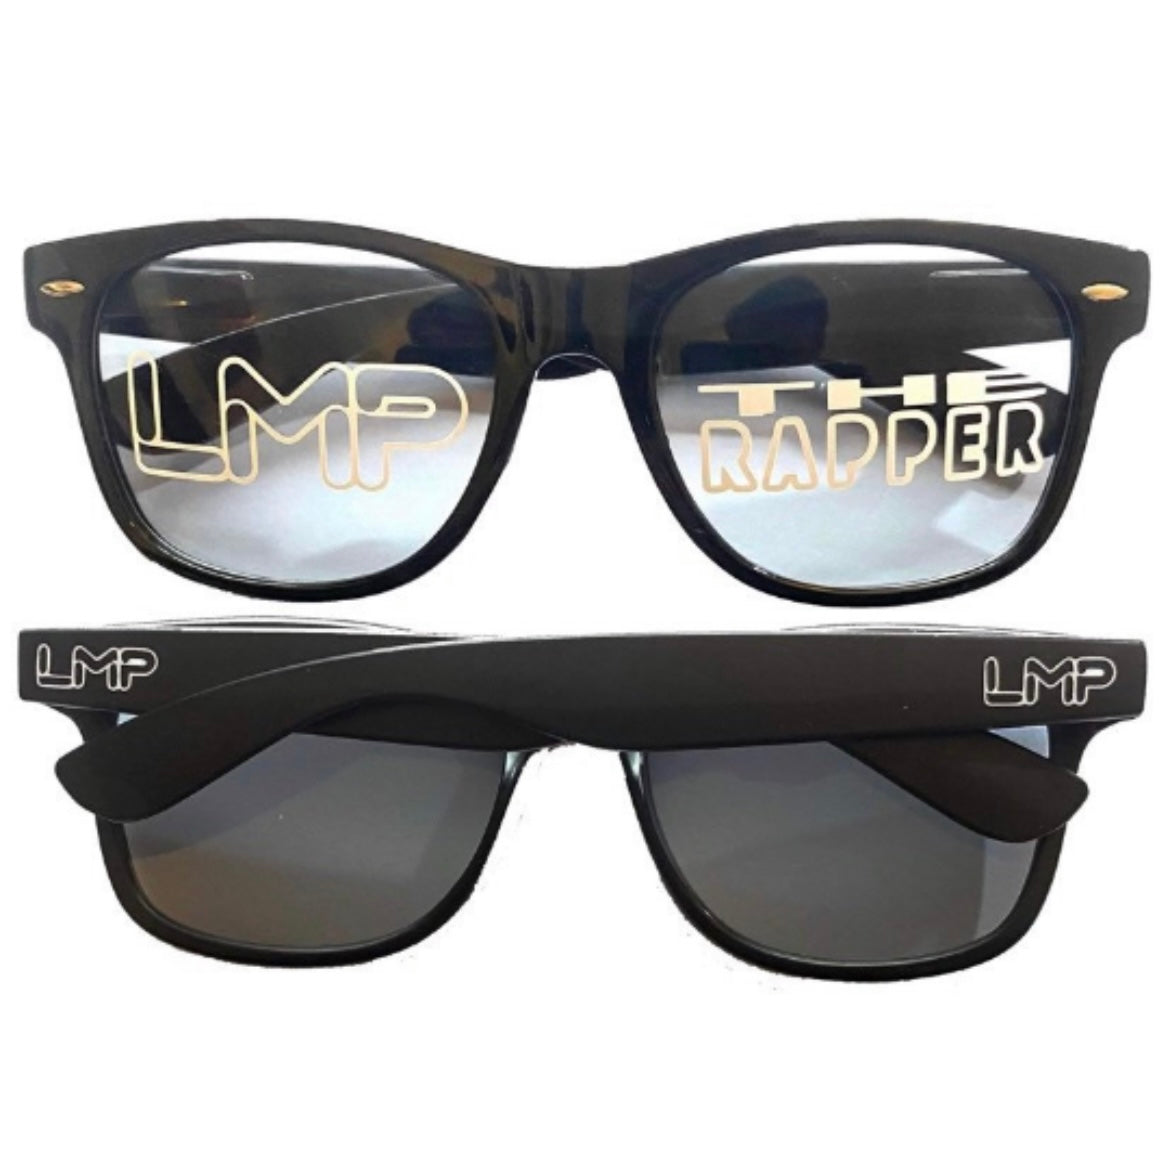 LMP The Rapper Sunglasses